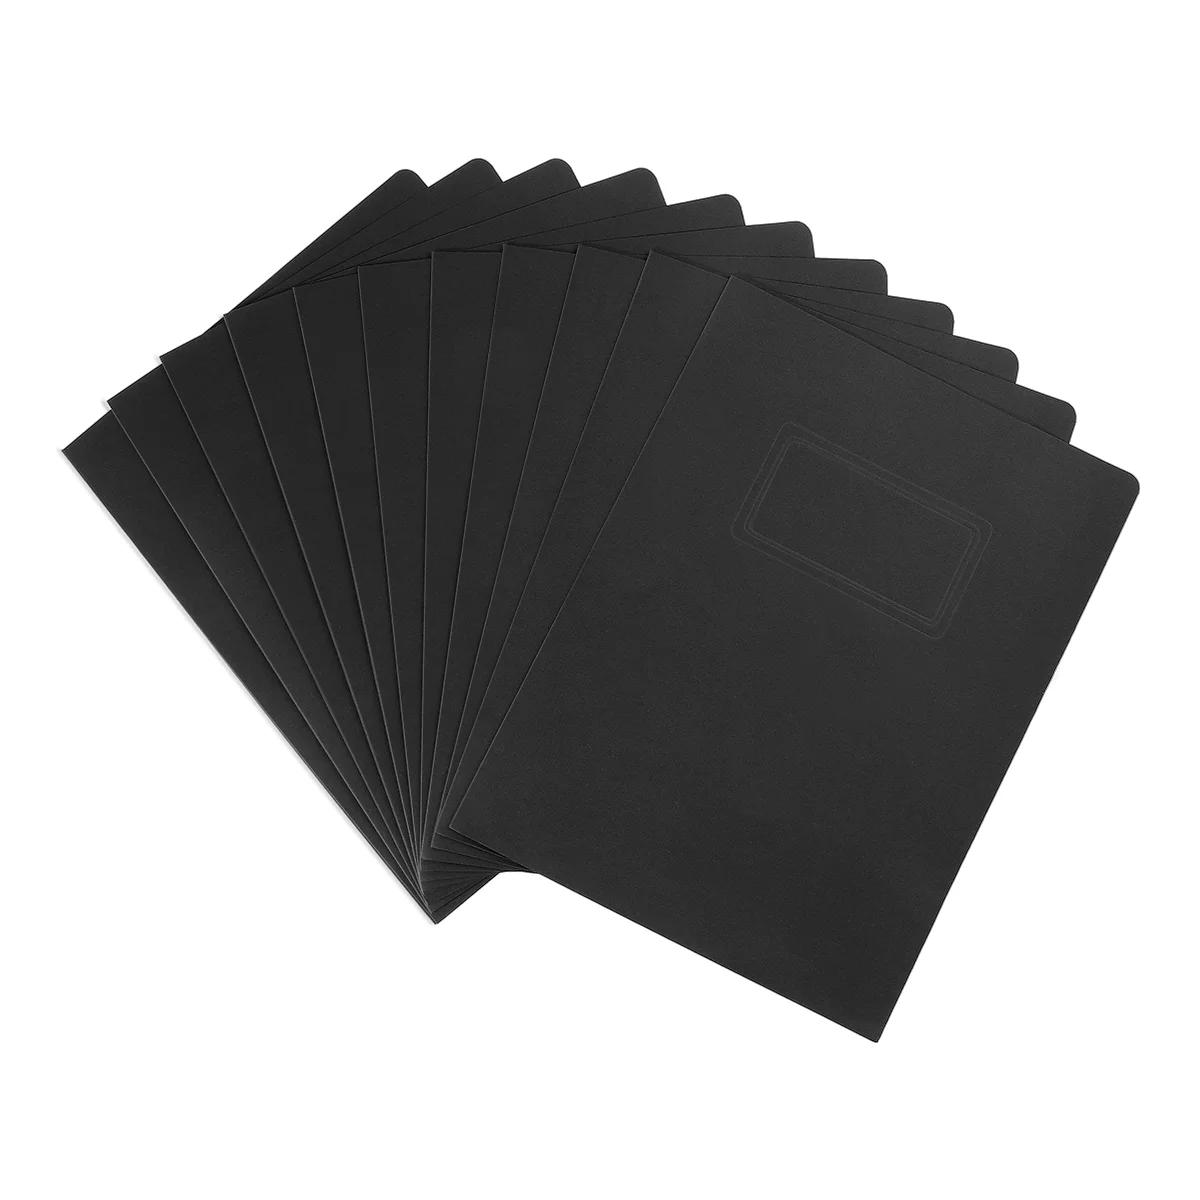 A4 포켓 크래프트 종이 파일 폴더, 카드홀더 문서 폴더, 사무실 프로젝트 파일, 프레젠테이션 폴더